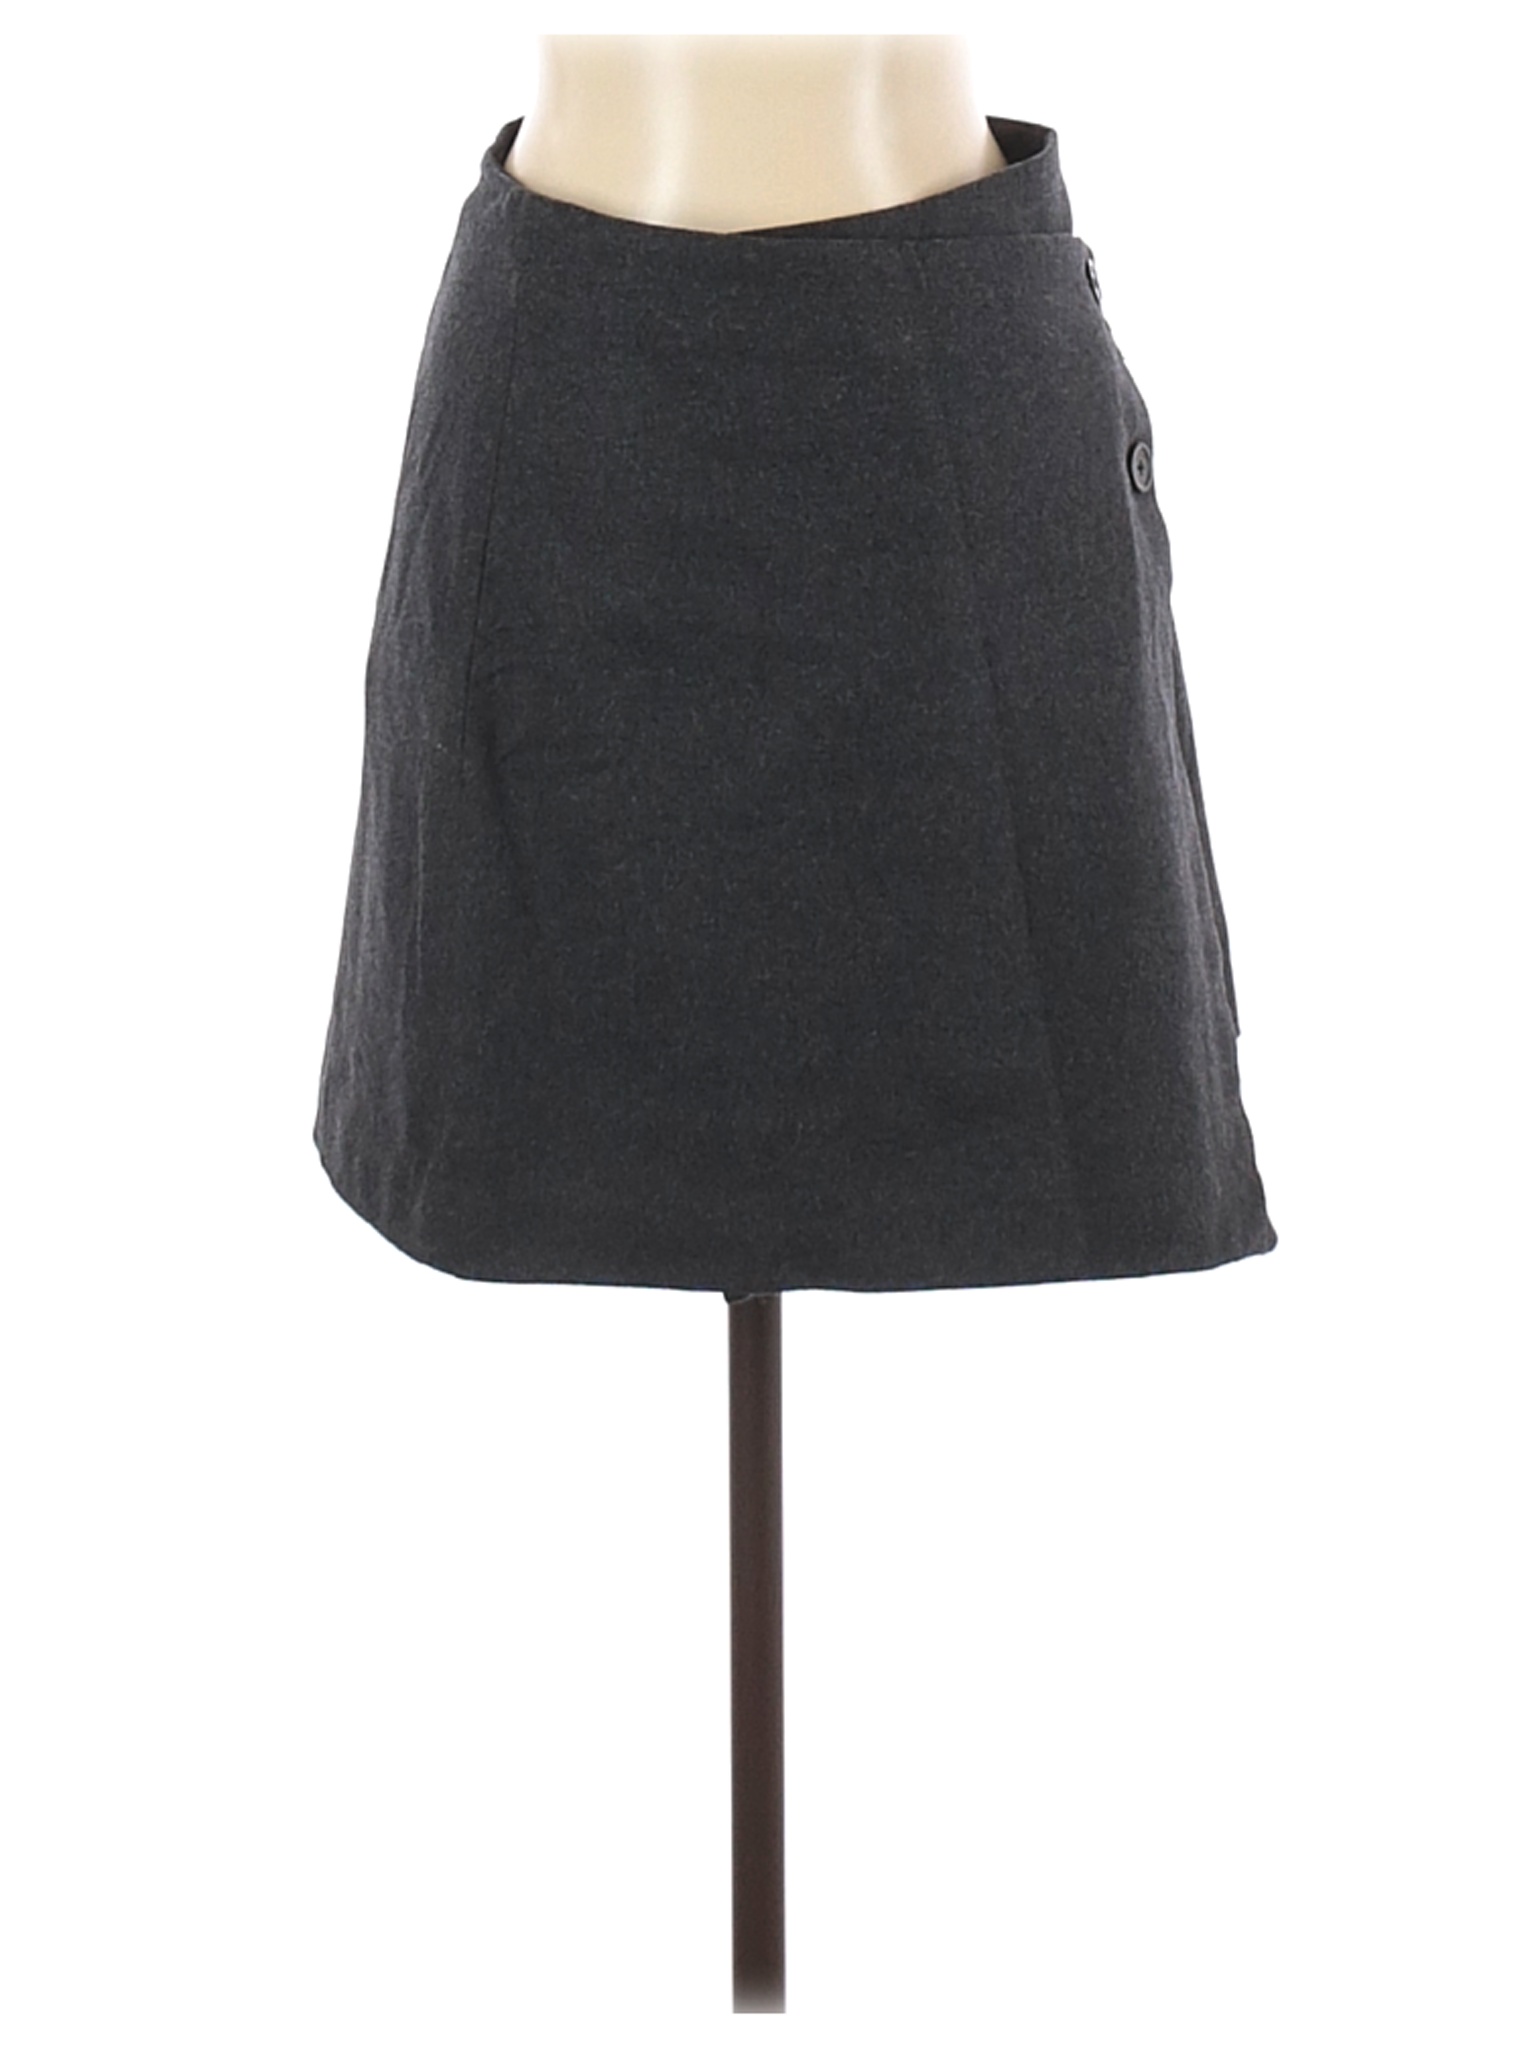 Wilfred Women Gray Wool Skirt 2 | eBay